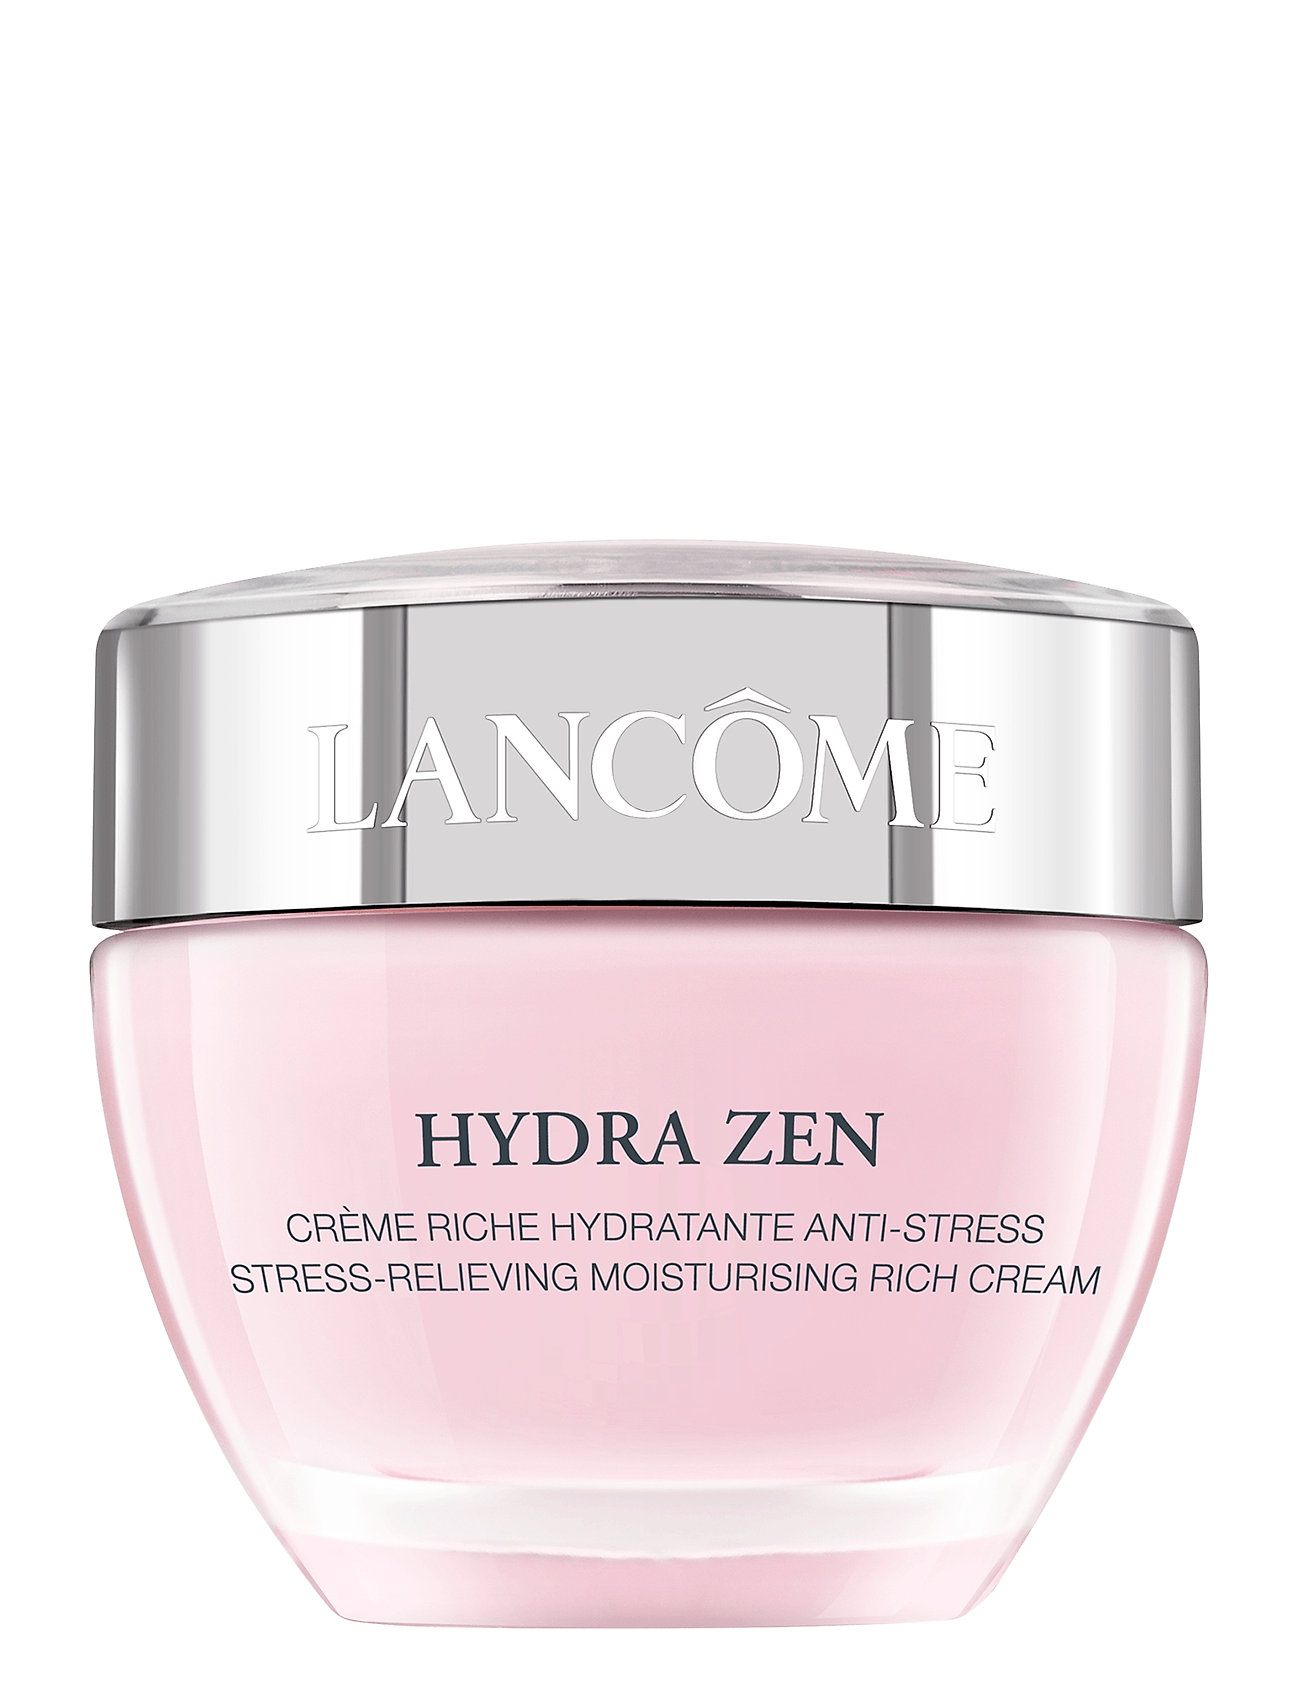 LancôMe Hydra Zen Cream 50ml Beauty WOMEN Skin Care Face Day Creams Nude Lancôme